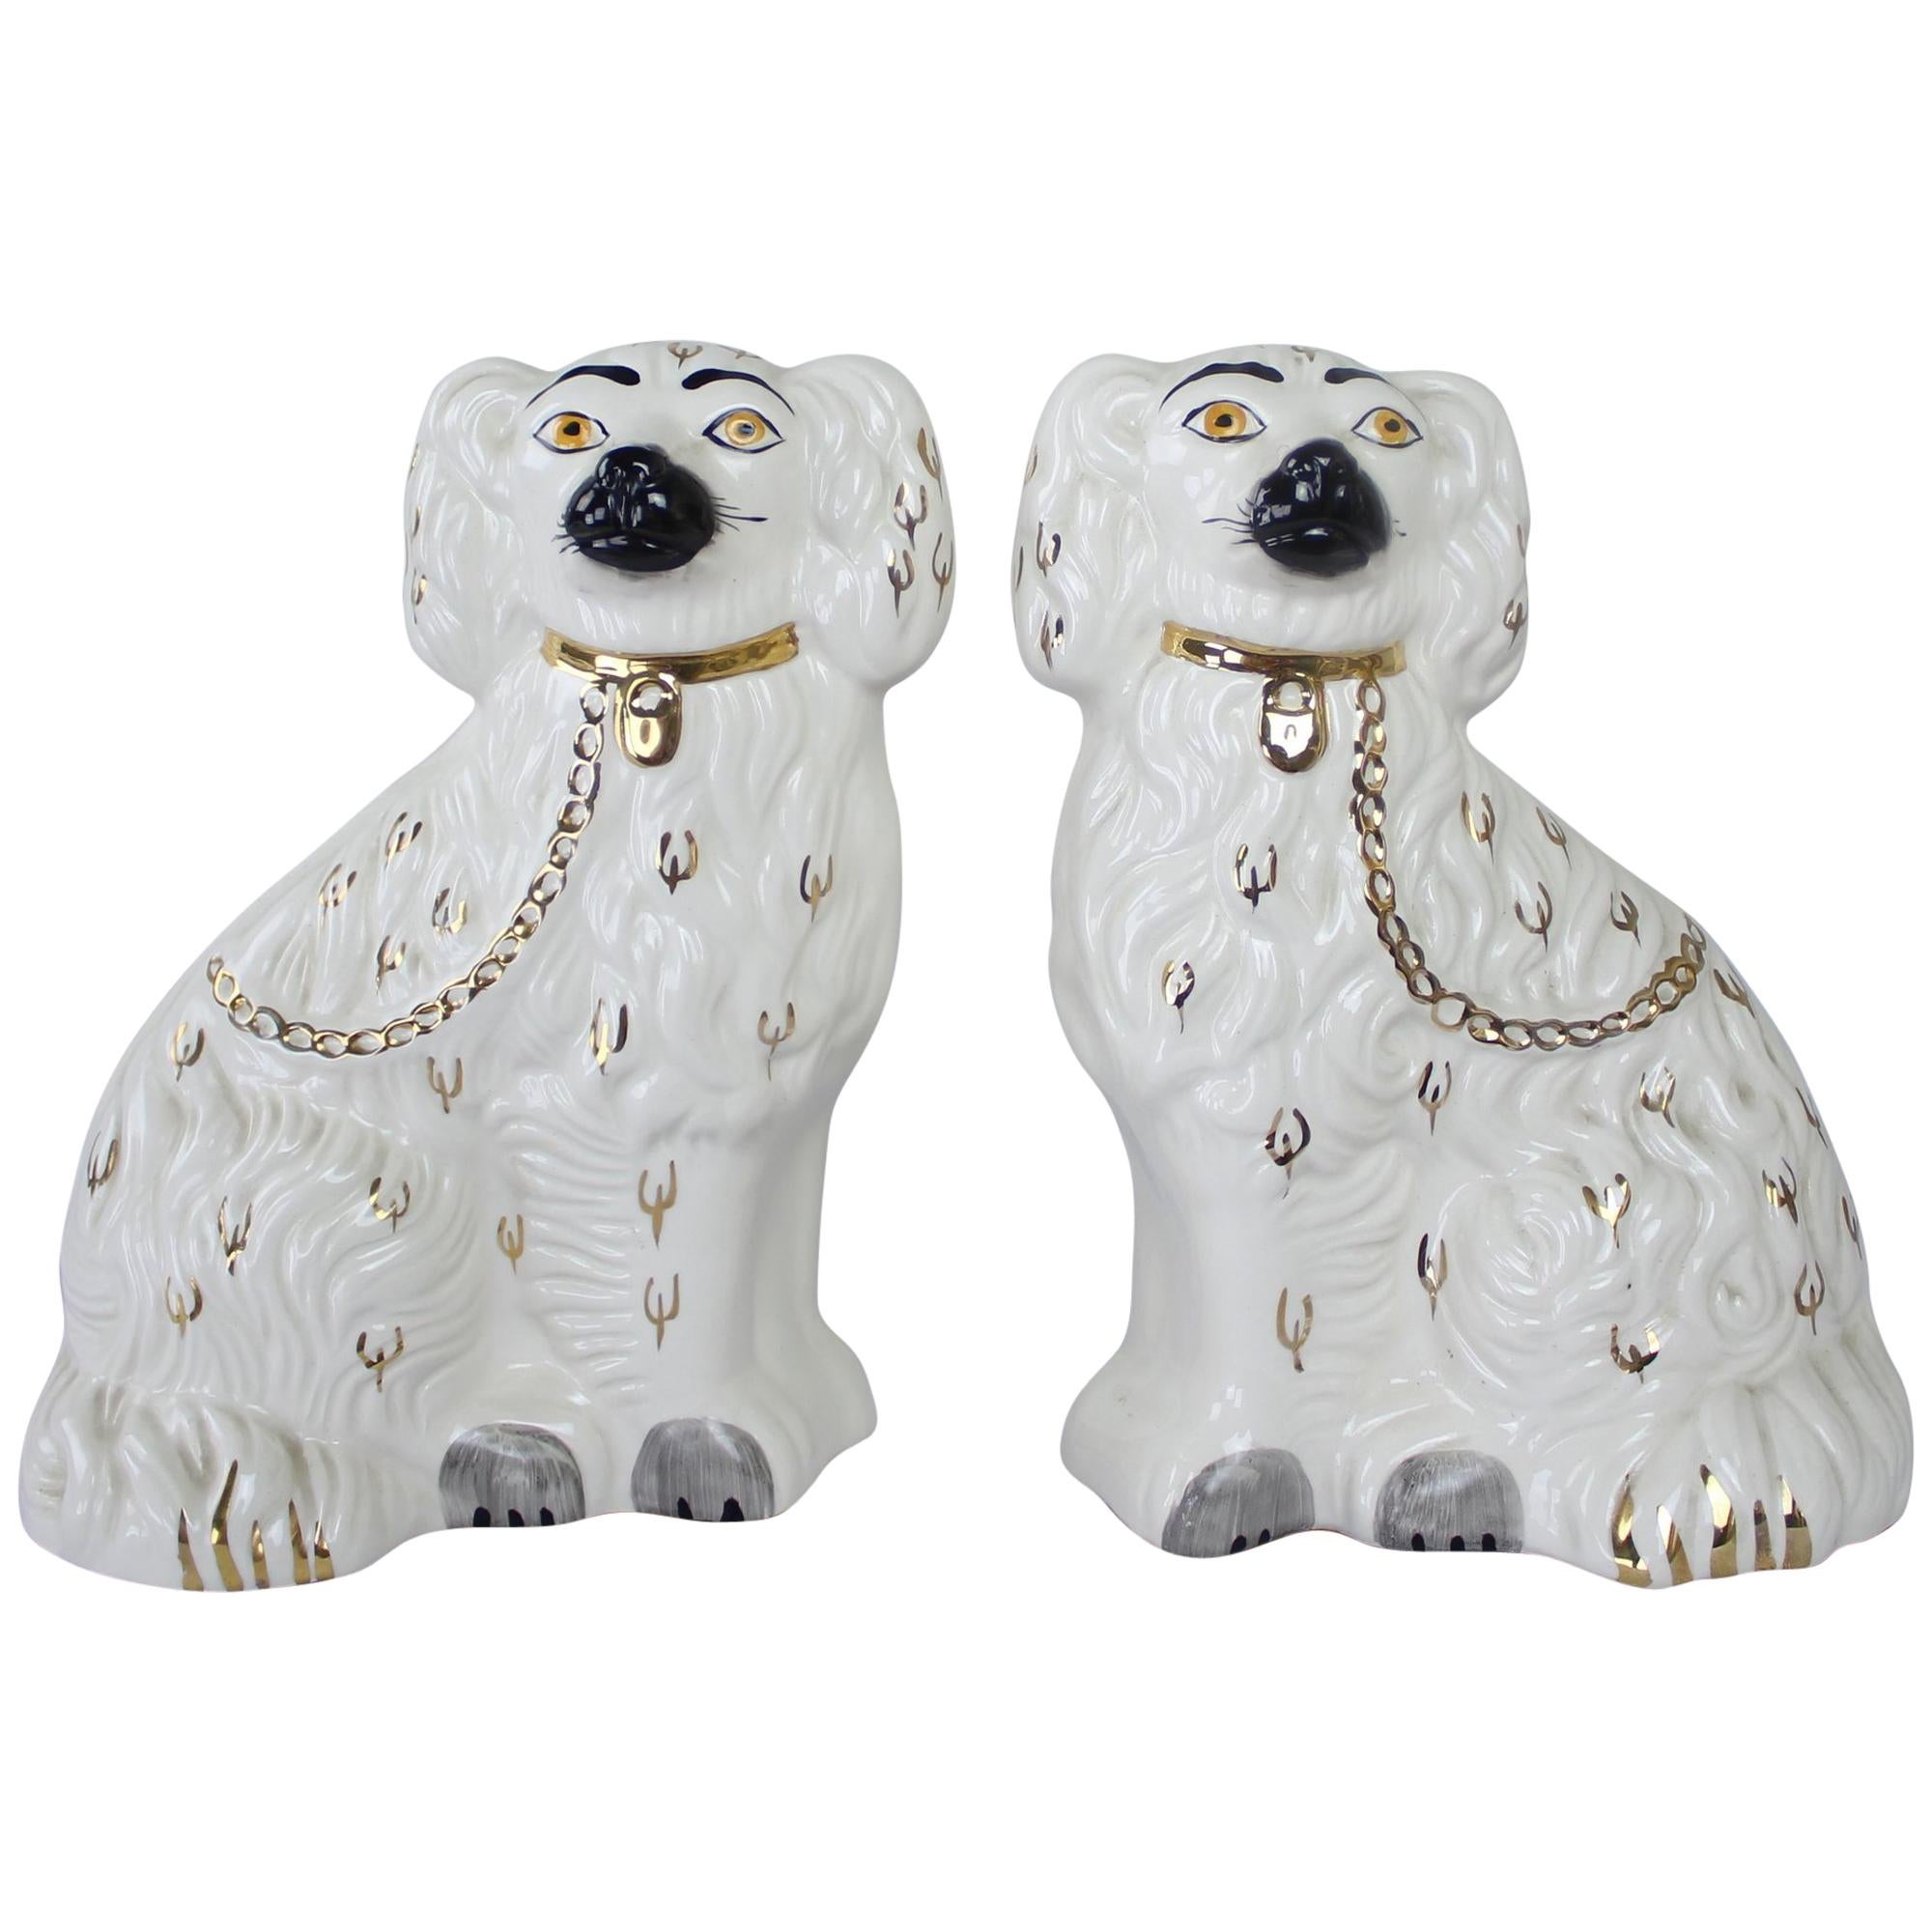 Pair of Antique English Staffordshire Ceramic Dogs